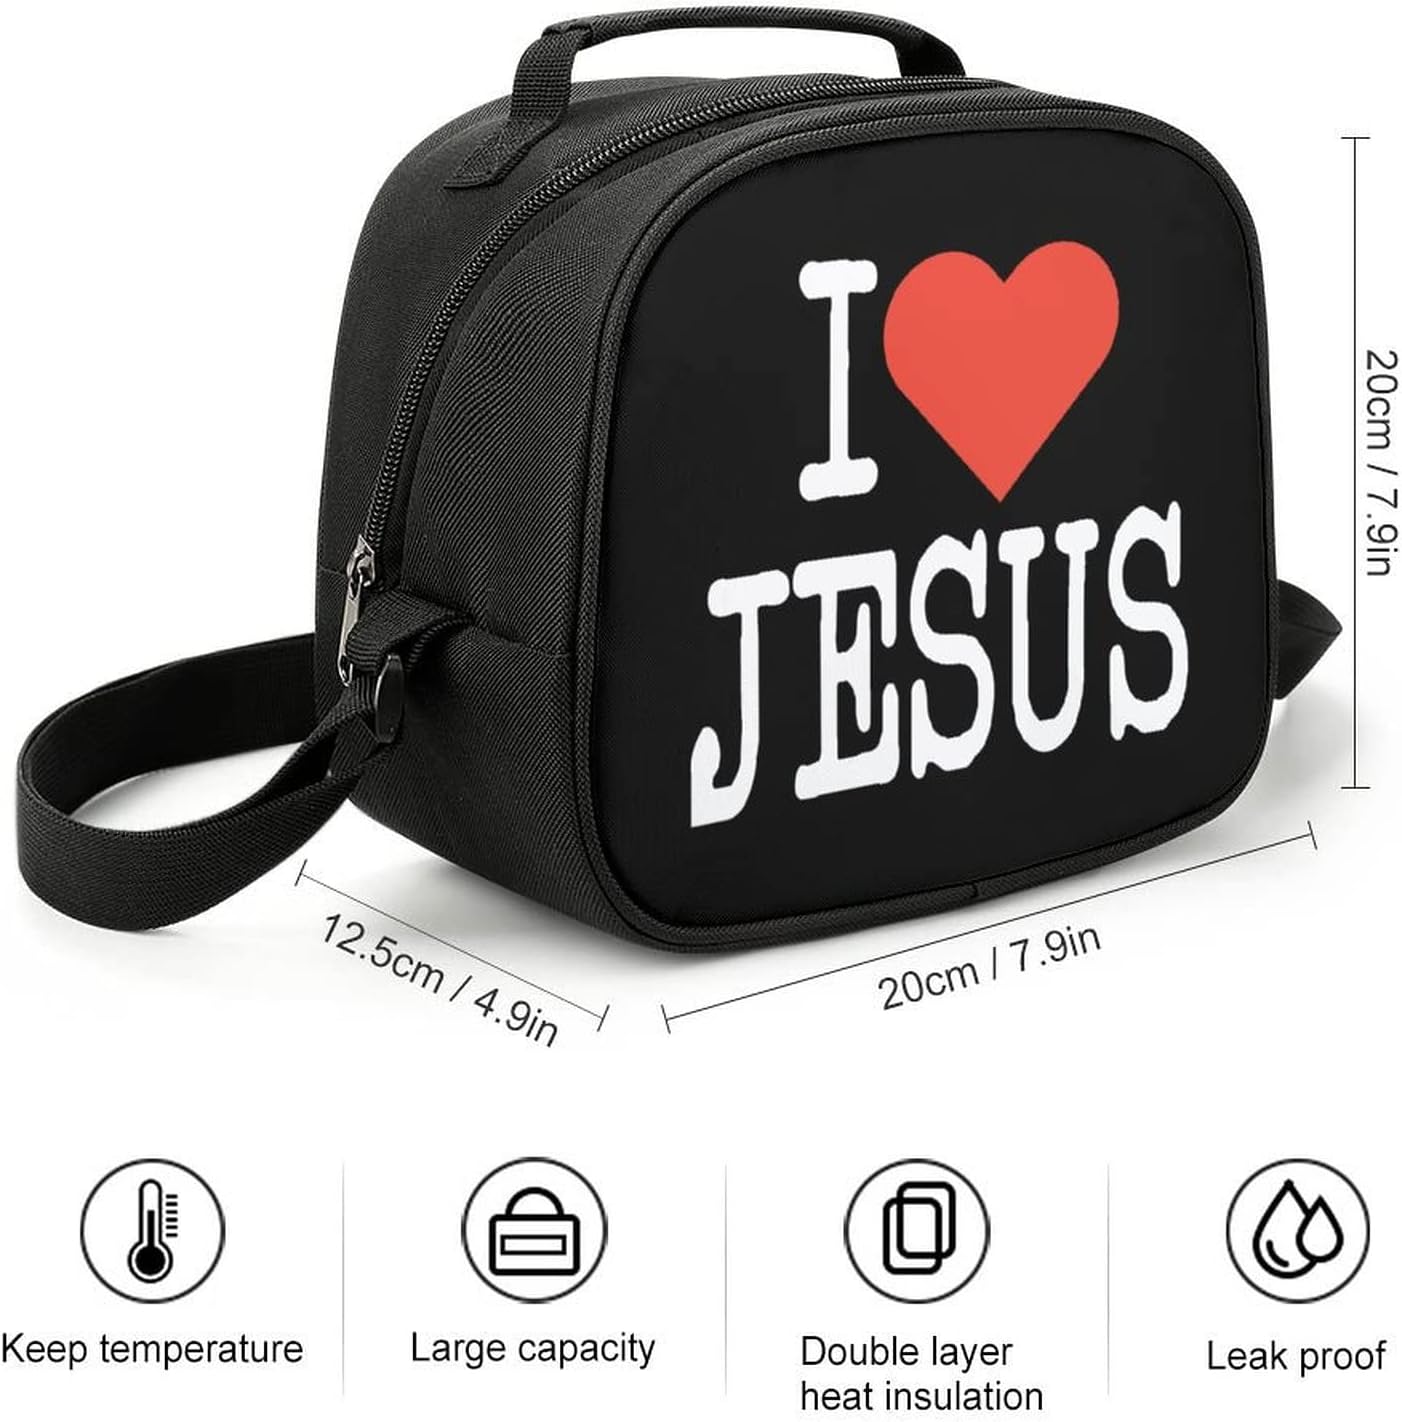 I Love Jesus Christian Lunch Bag claimedbygoddesigns